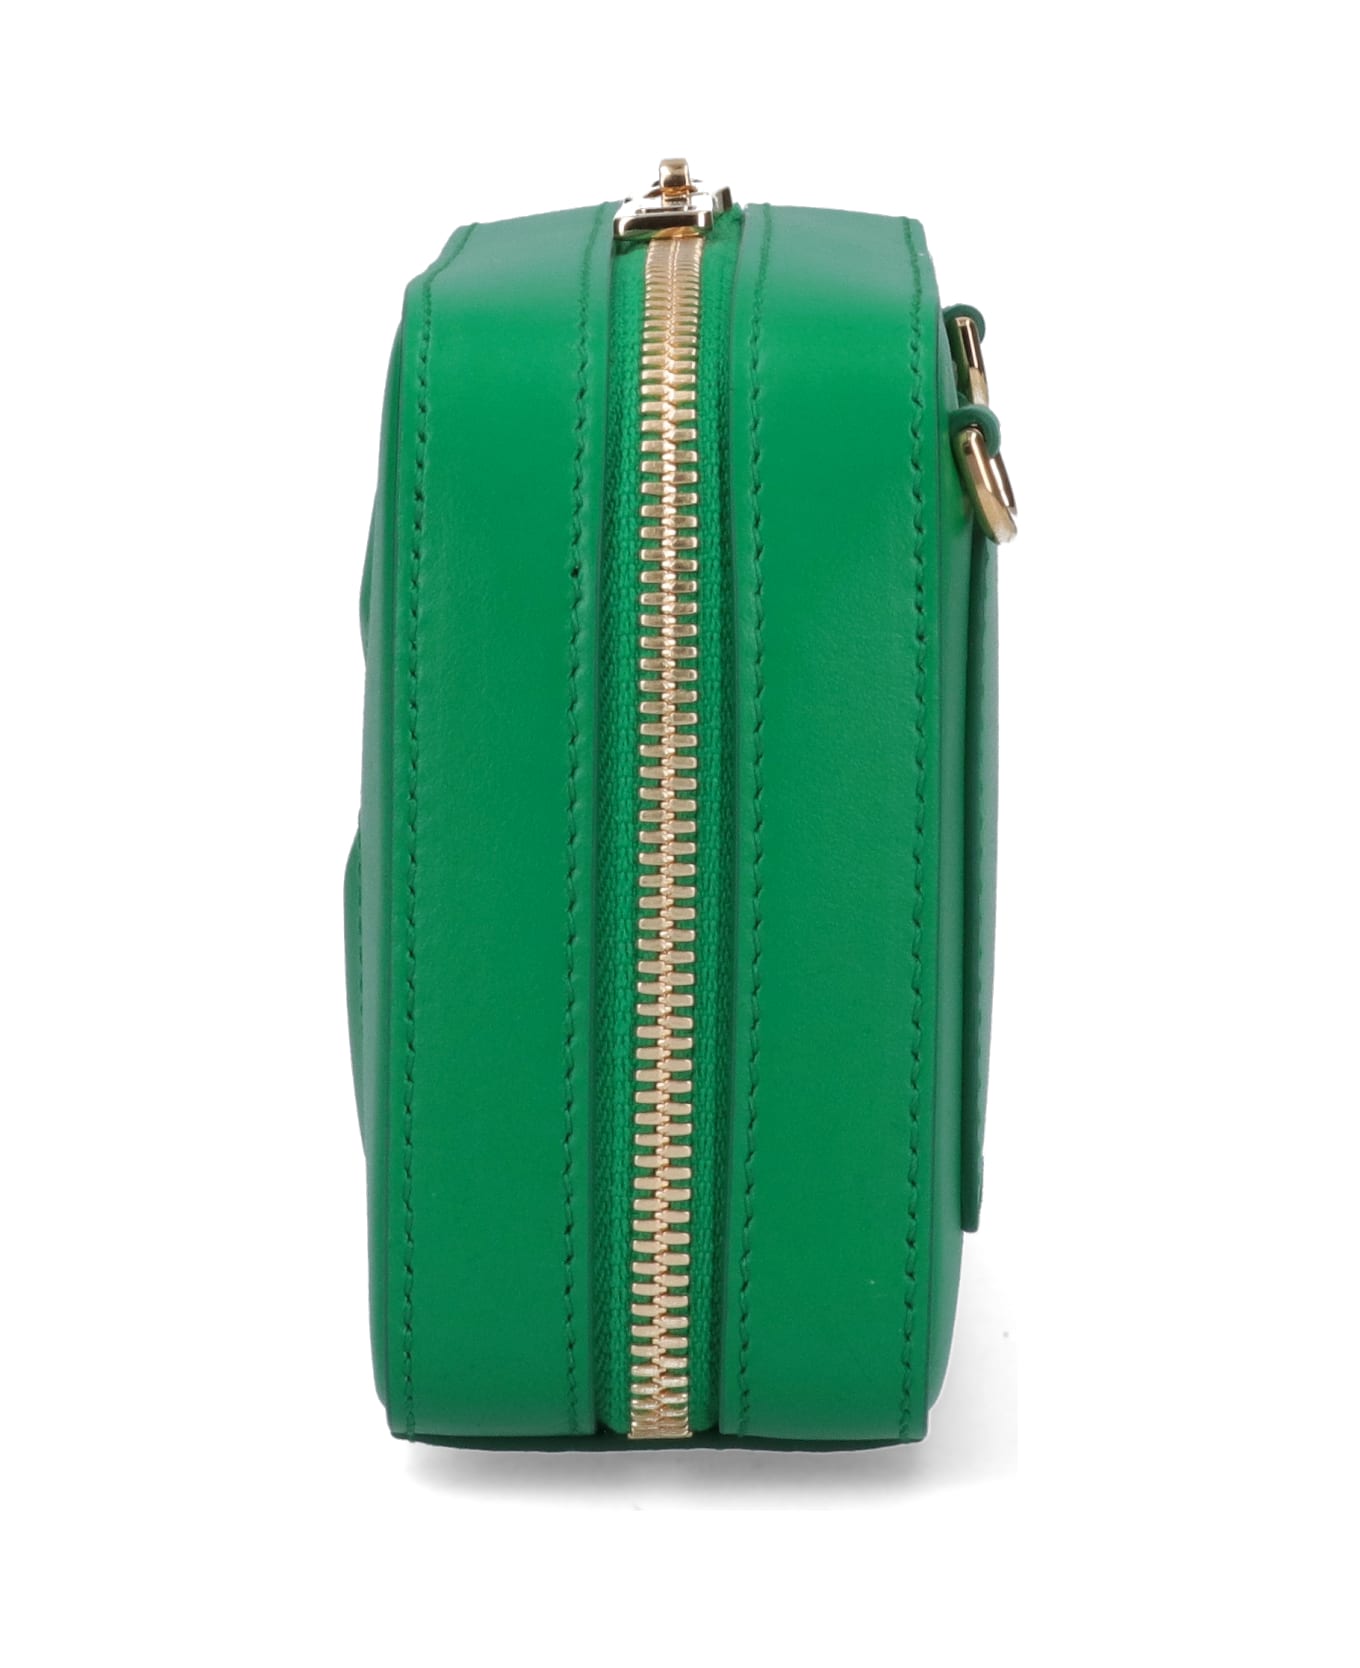 Dolce & Gabbana Camera Case Bag - Green クラッチバッグ